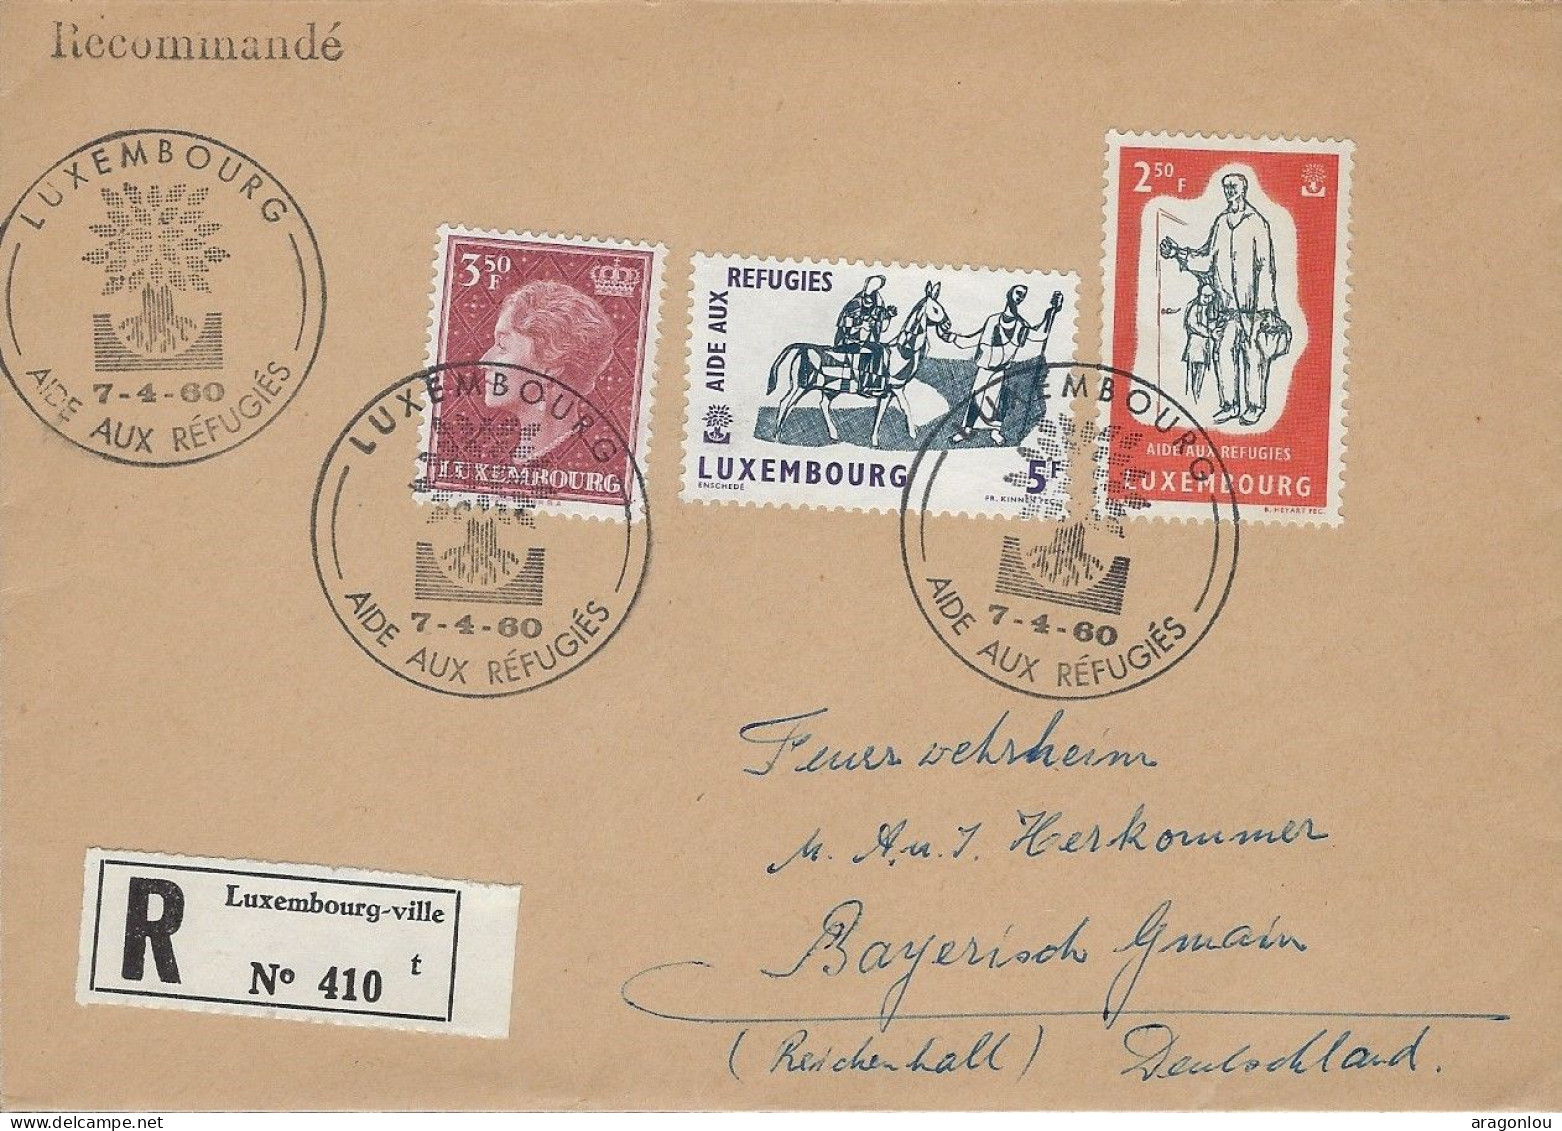 Luxembourg - Luxemburg - Lettre  Recommandé   1960 - Ungebraucht